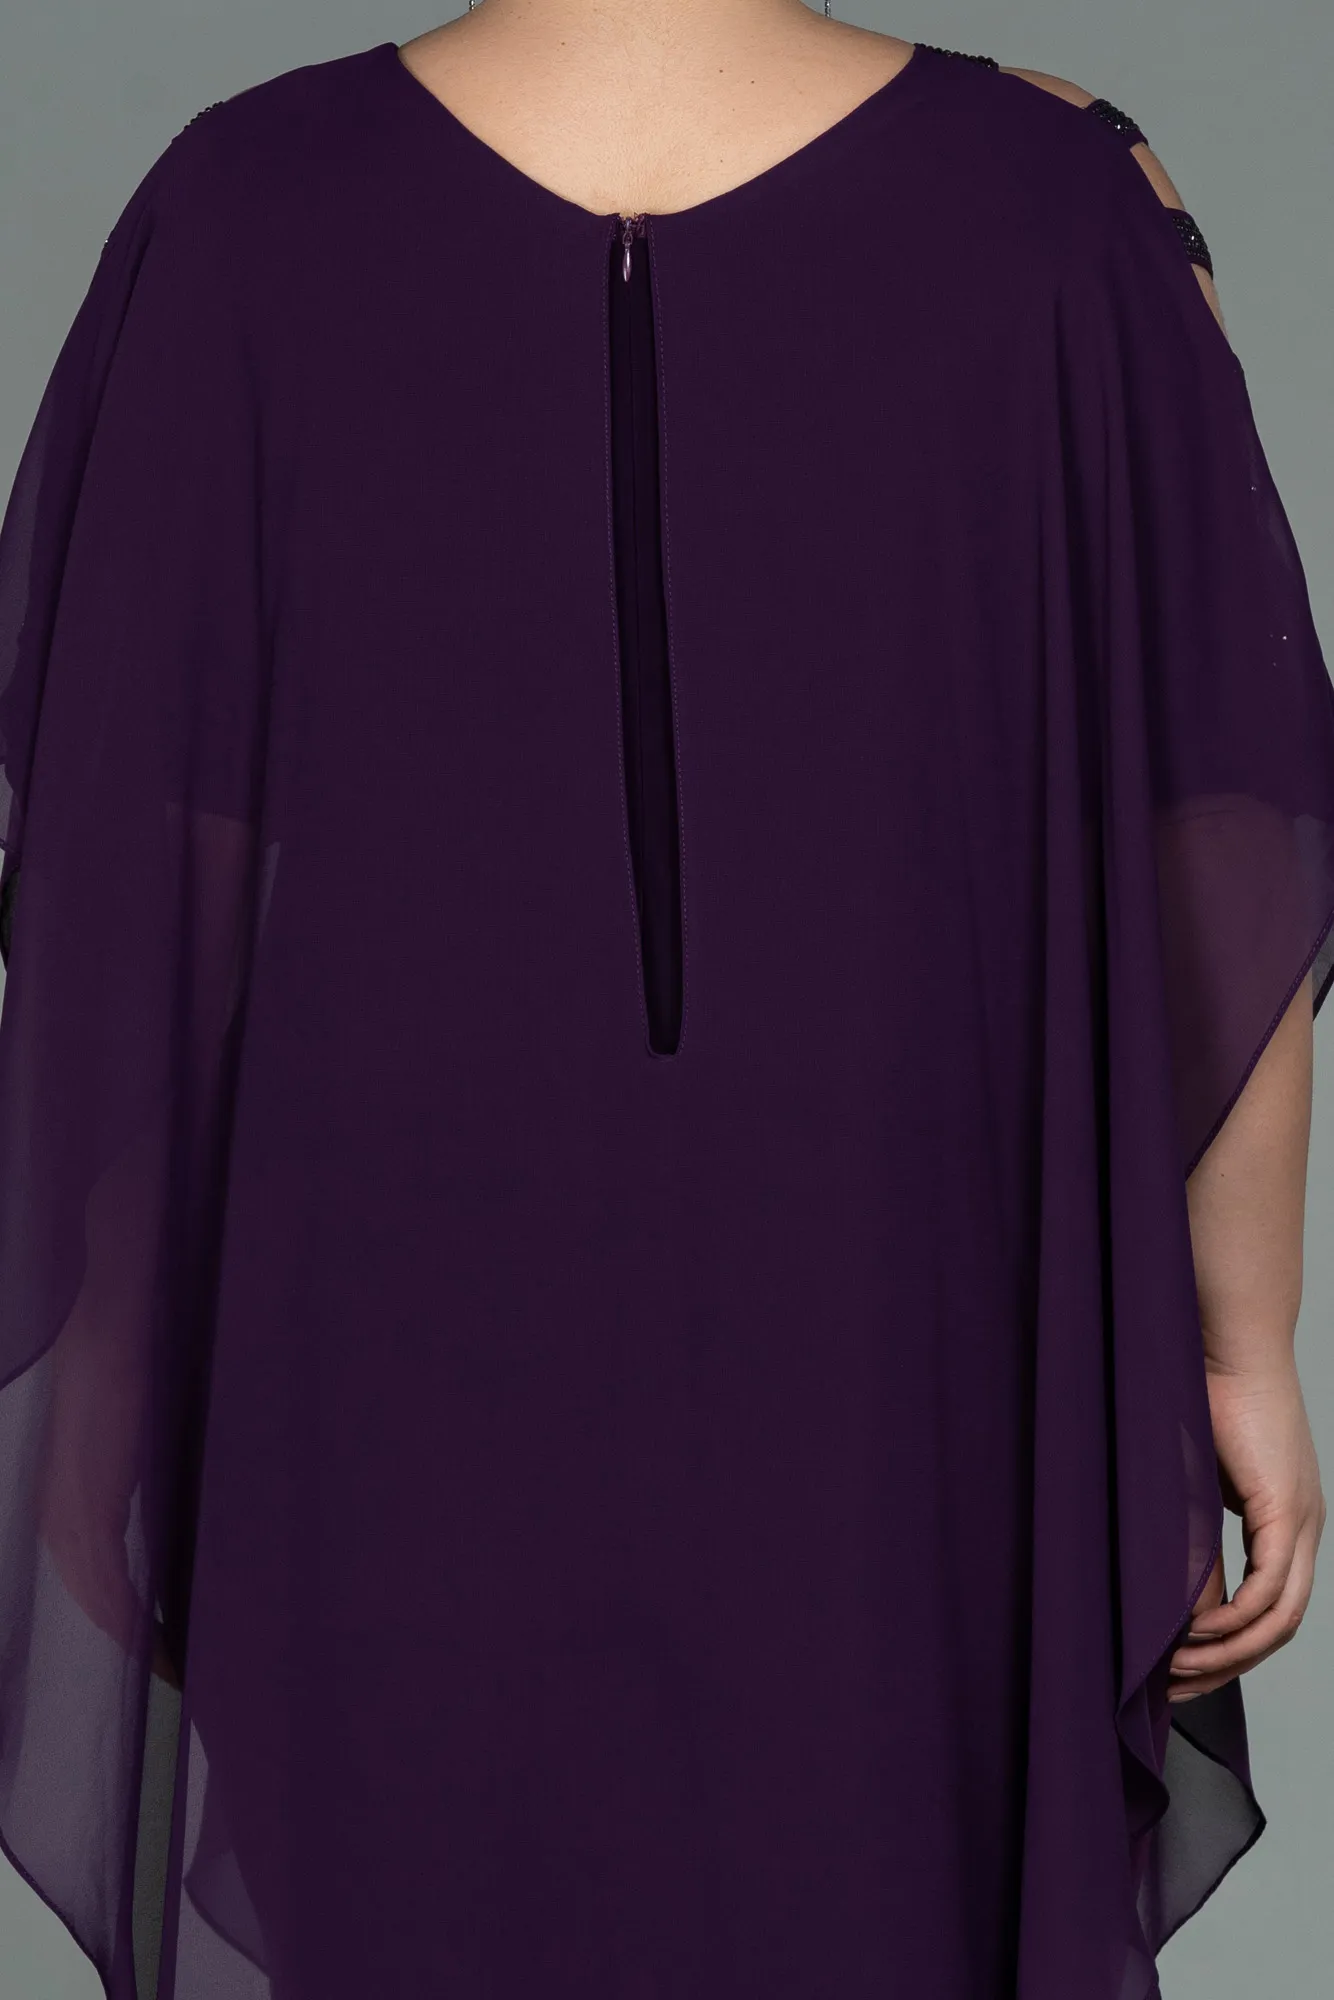 Purple-Chiffon Plus Size Evening Dress ABT080